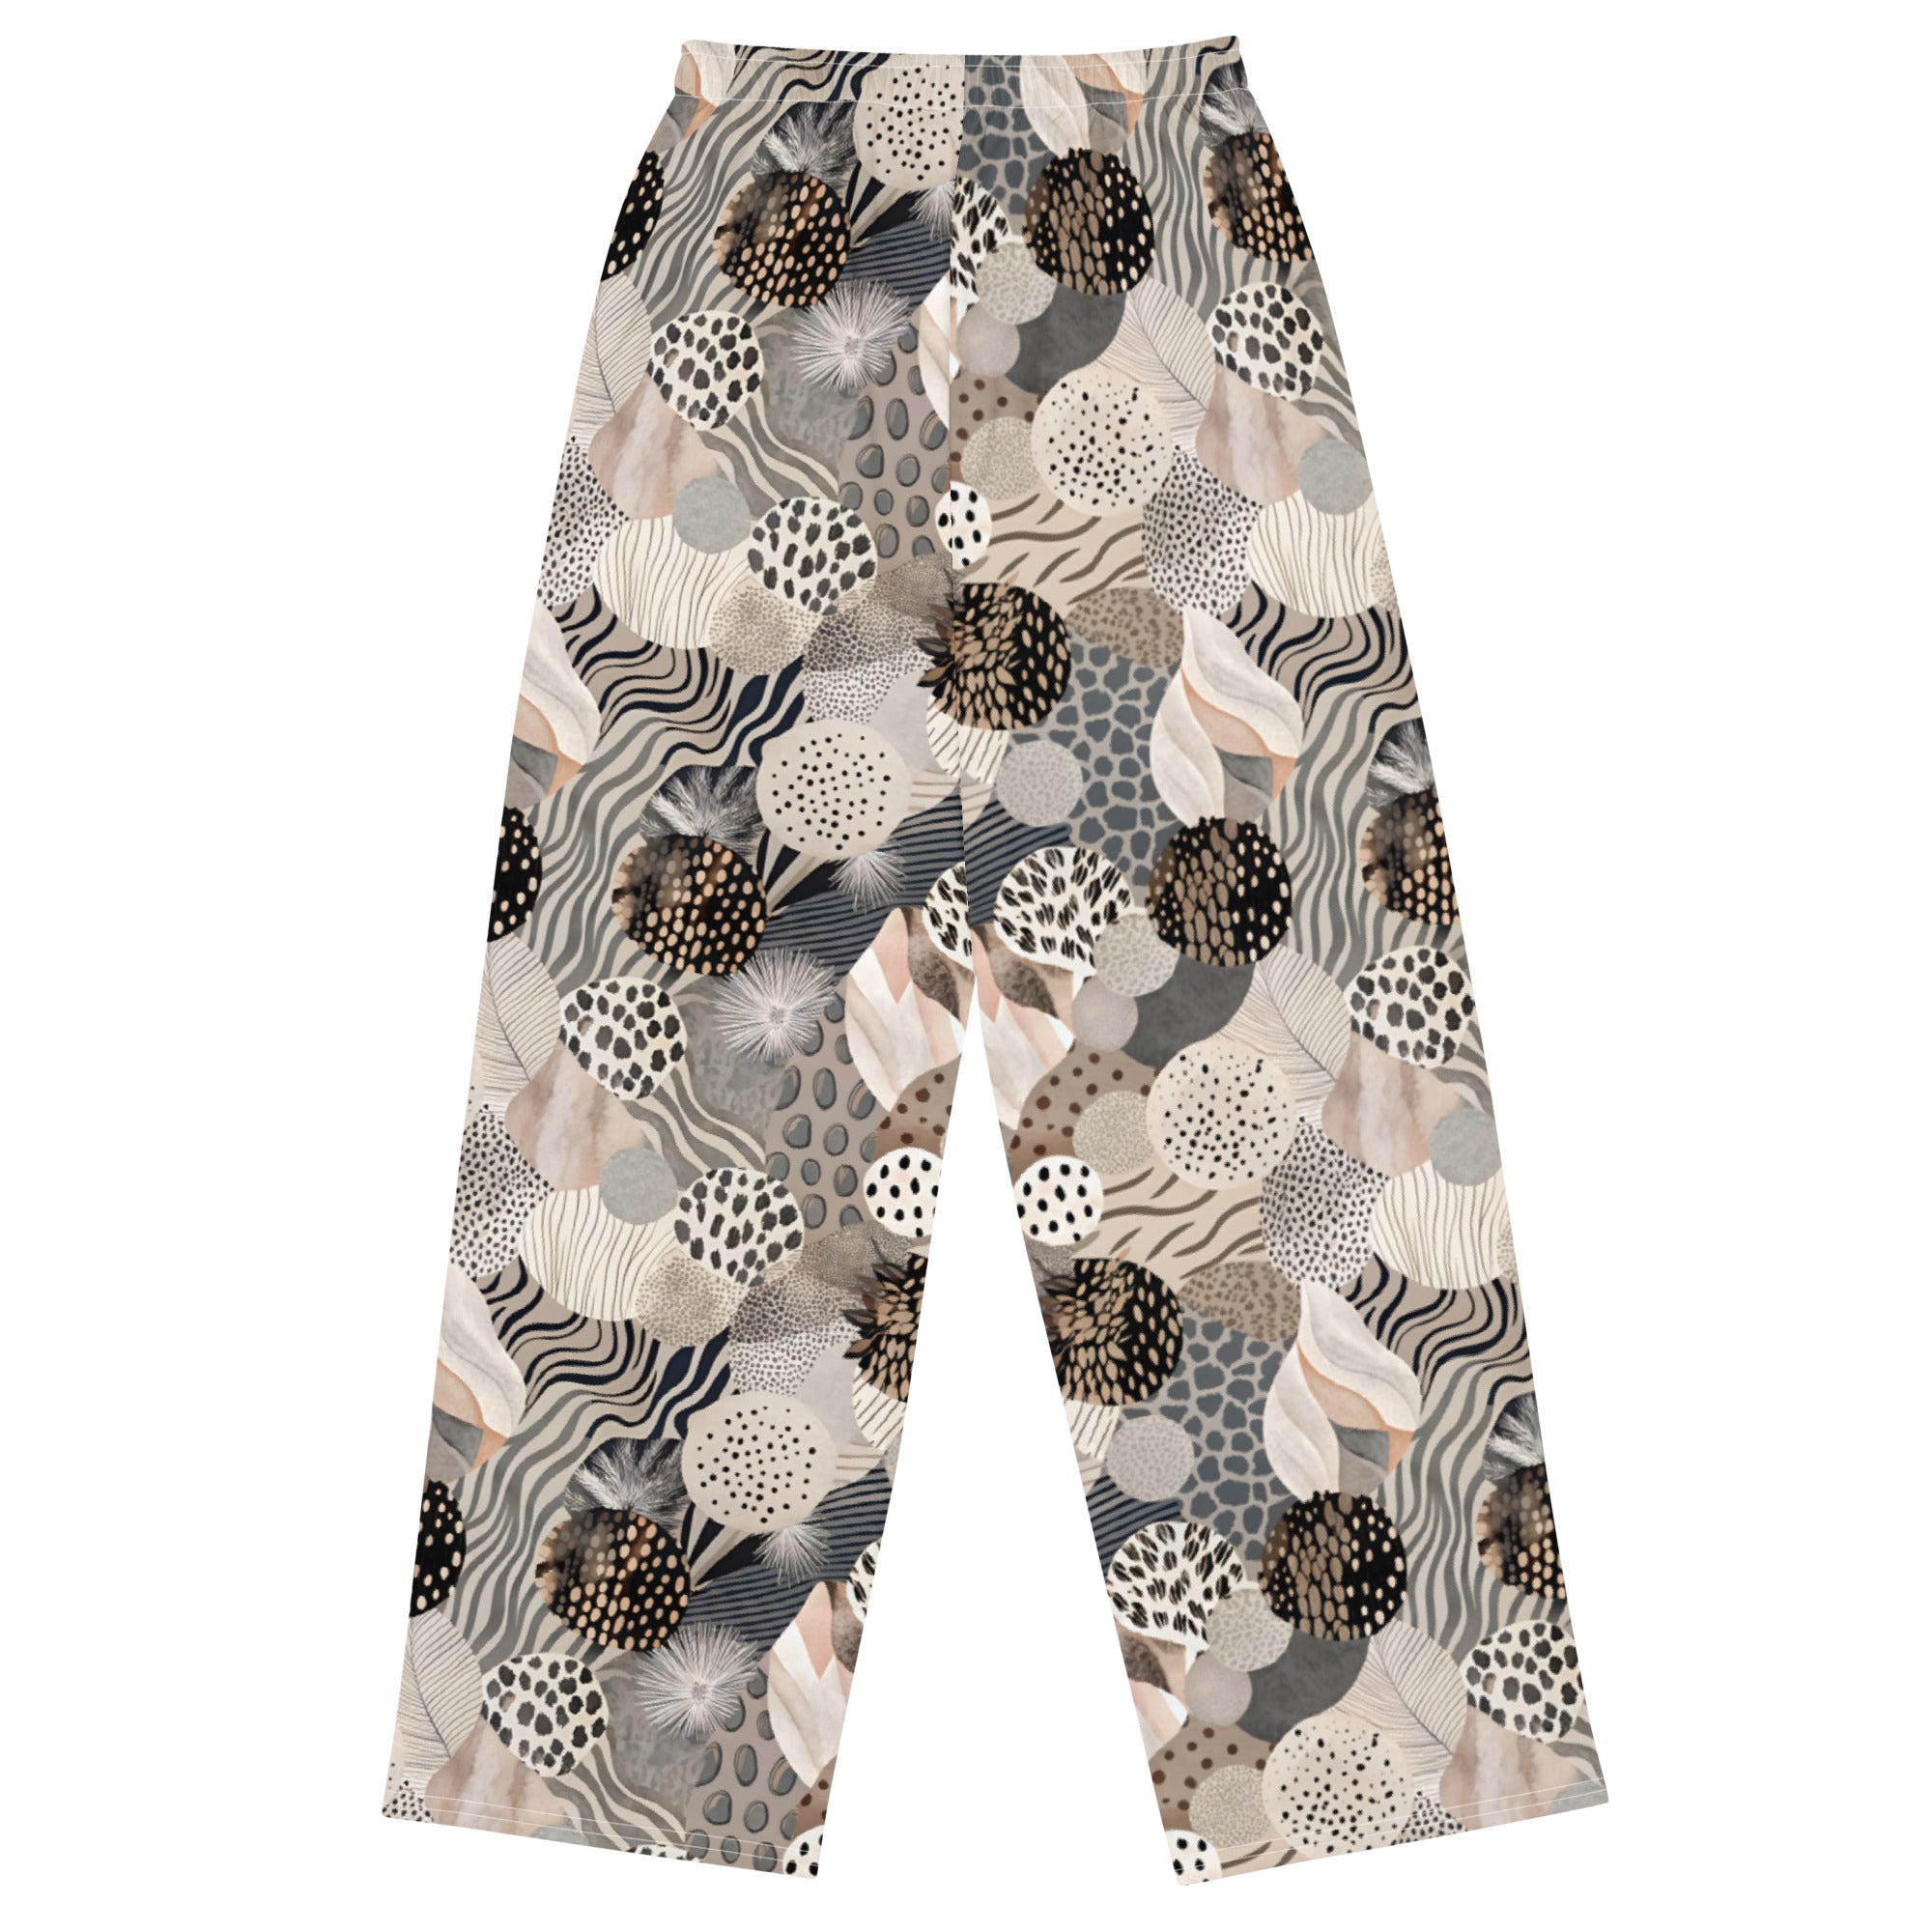 unisex wide-leg pants- Artsy Animal Print Design 07